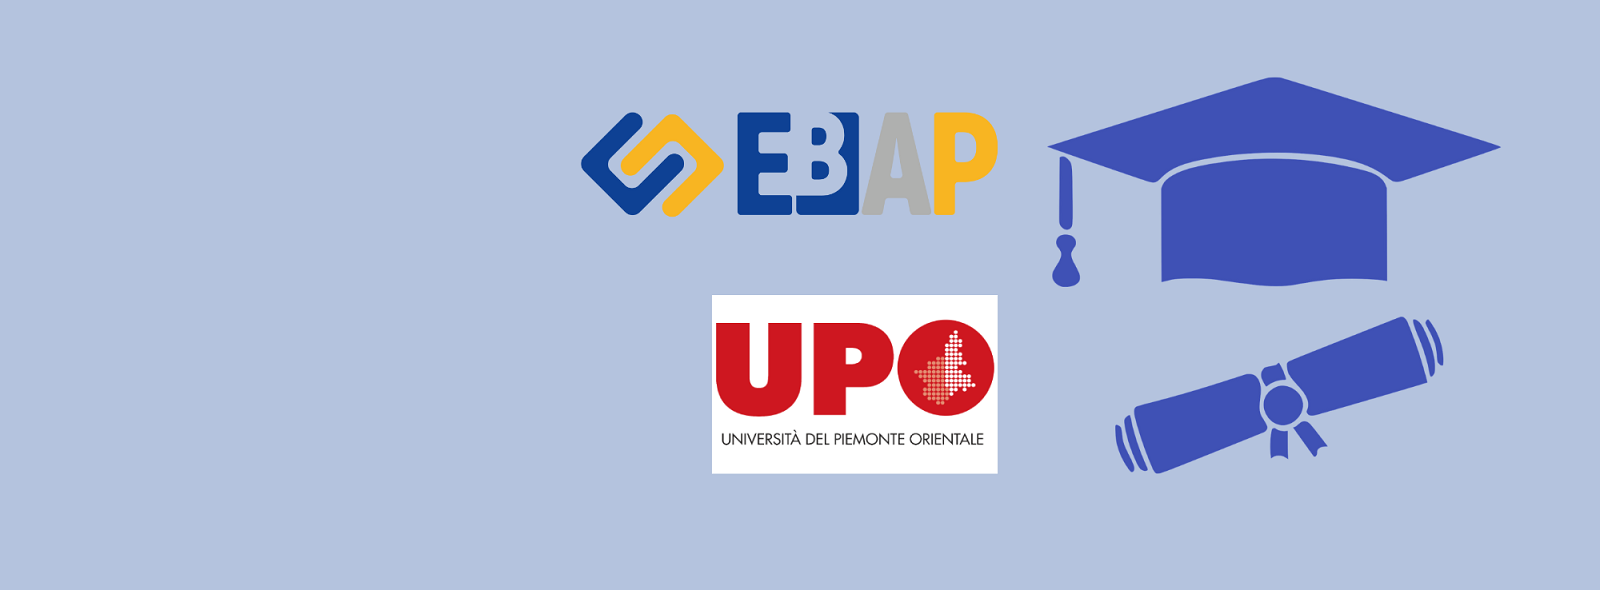 Premi di laurea EBAP per i laureati UPO